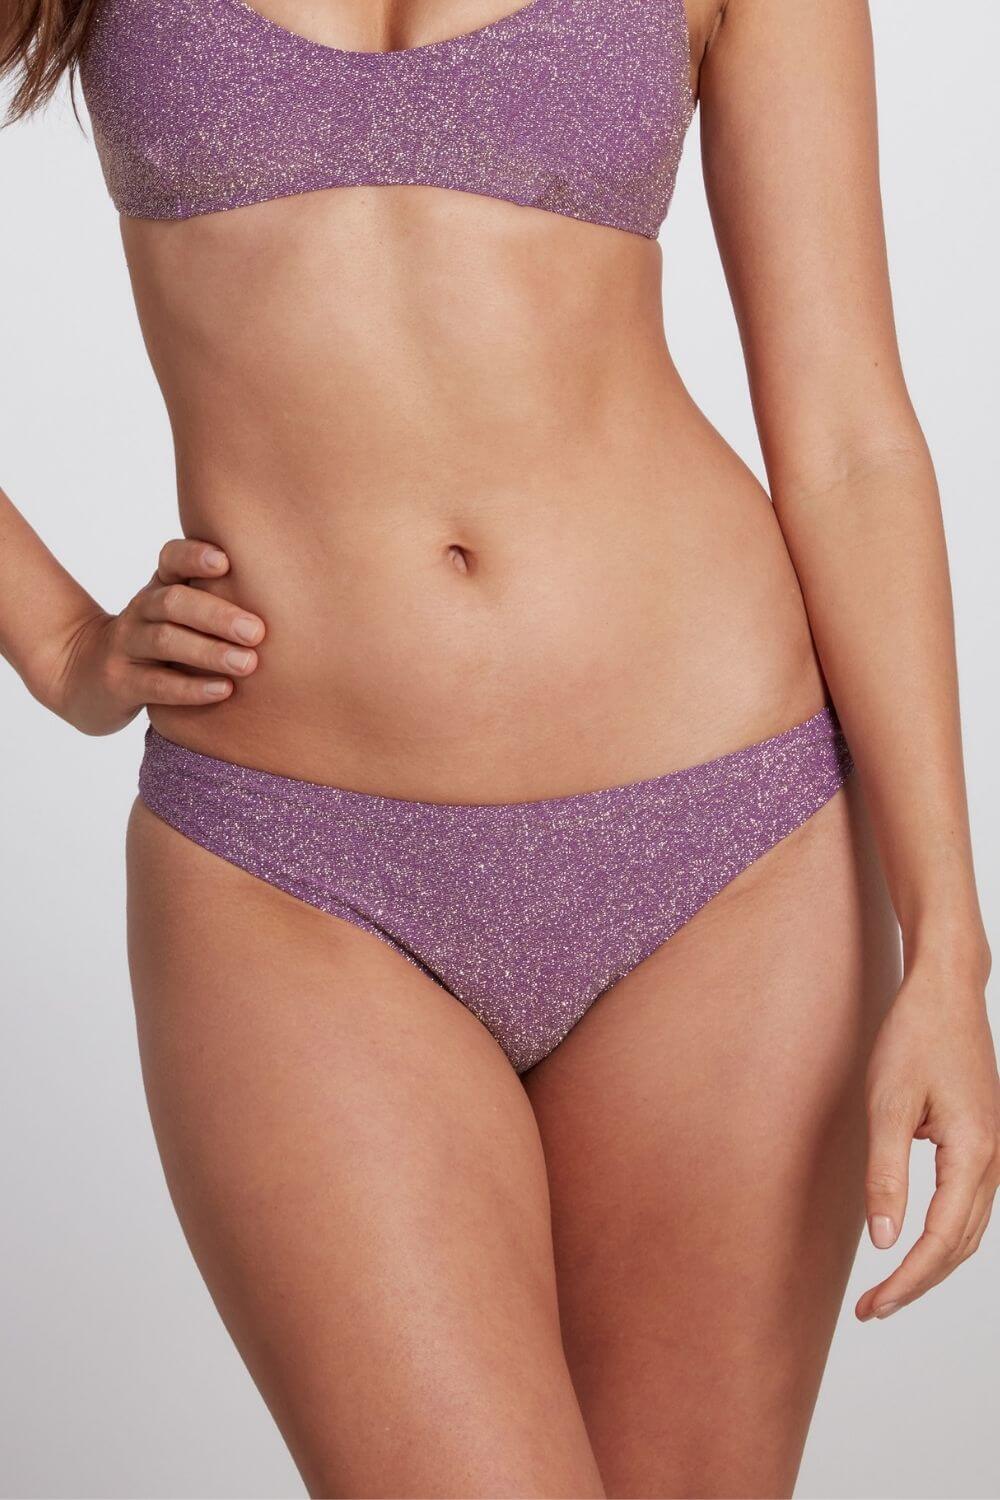 Jenna low rise glittered violet bikini bottom is a classic brief bikini bottom.